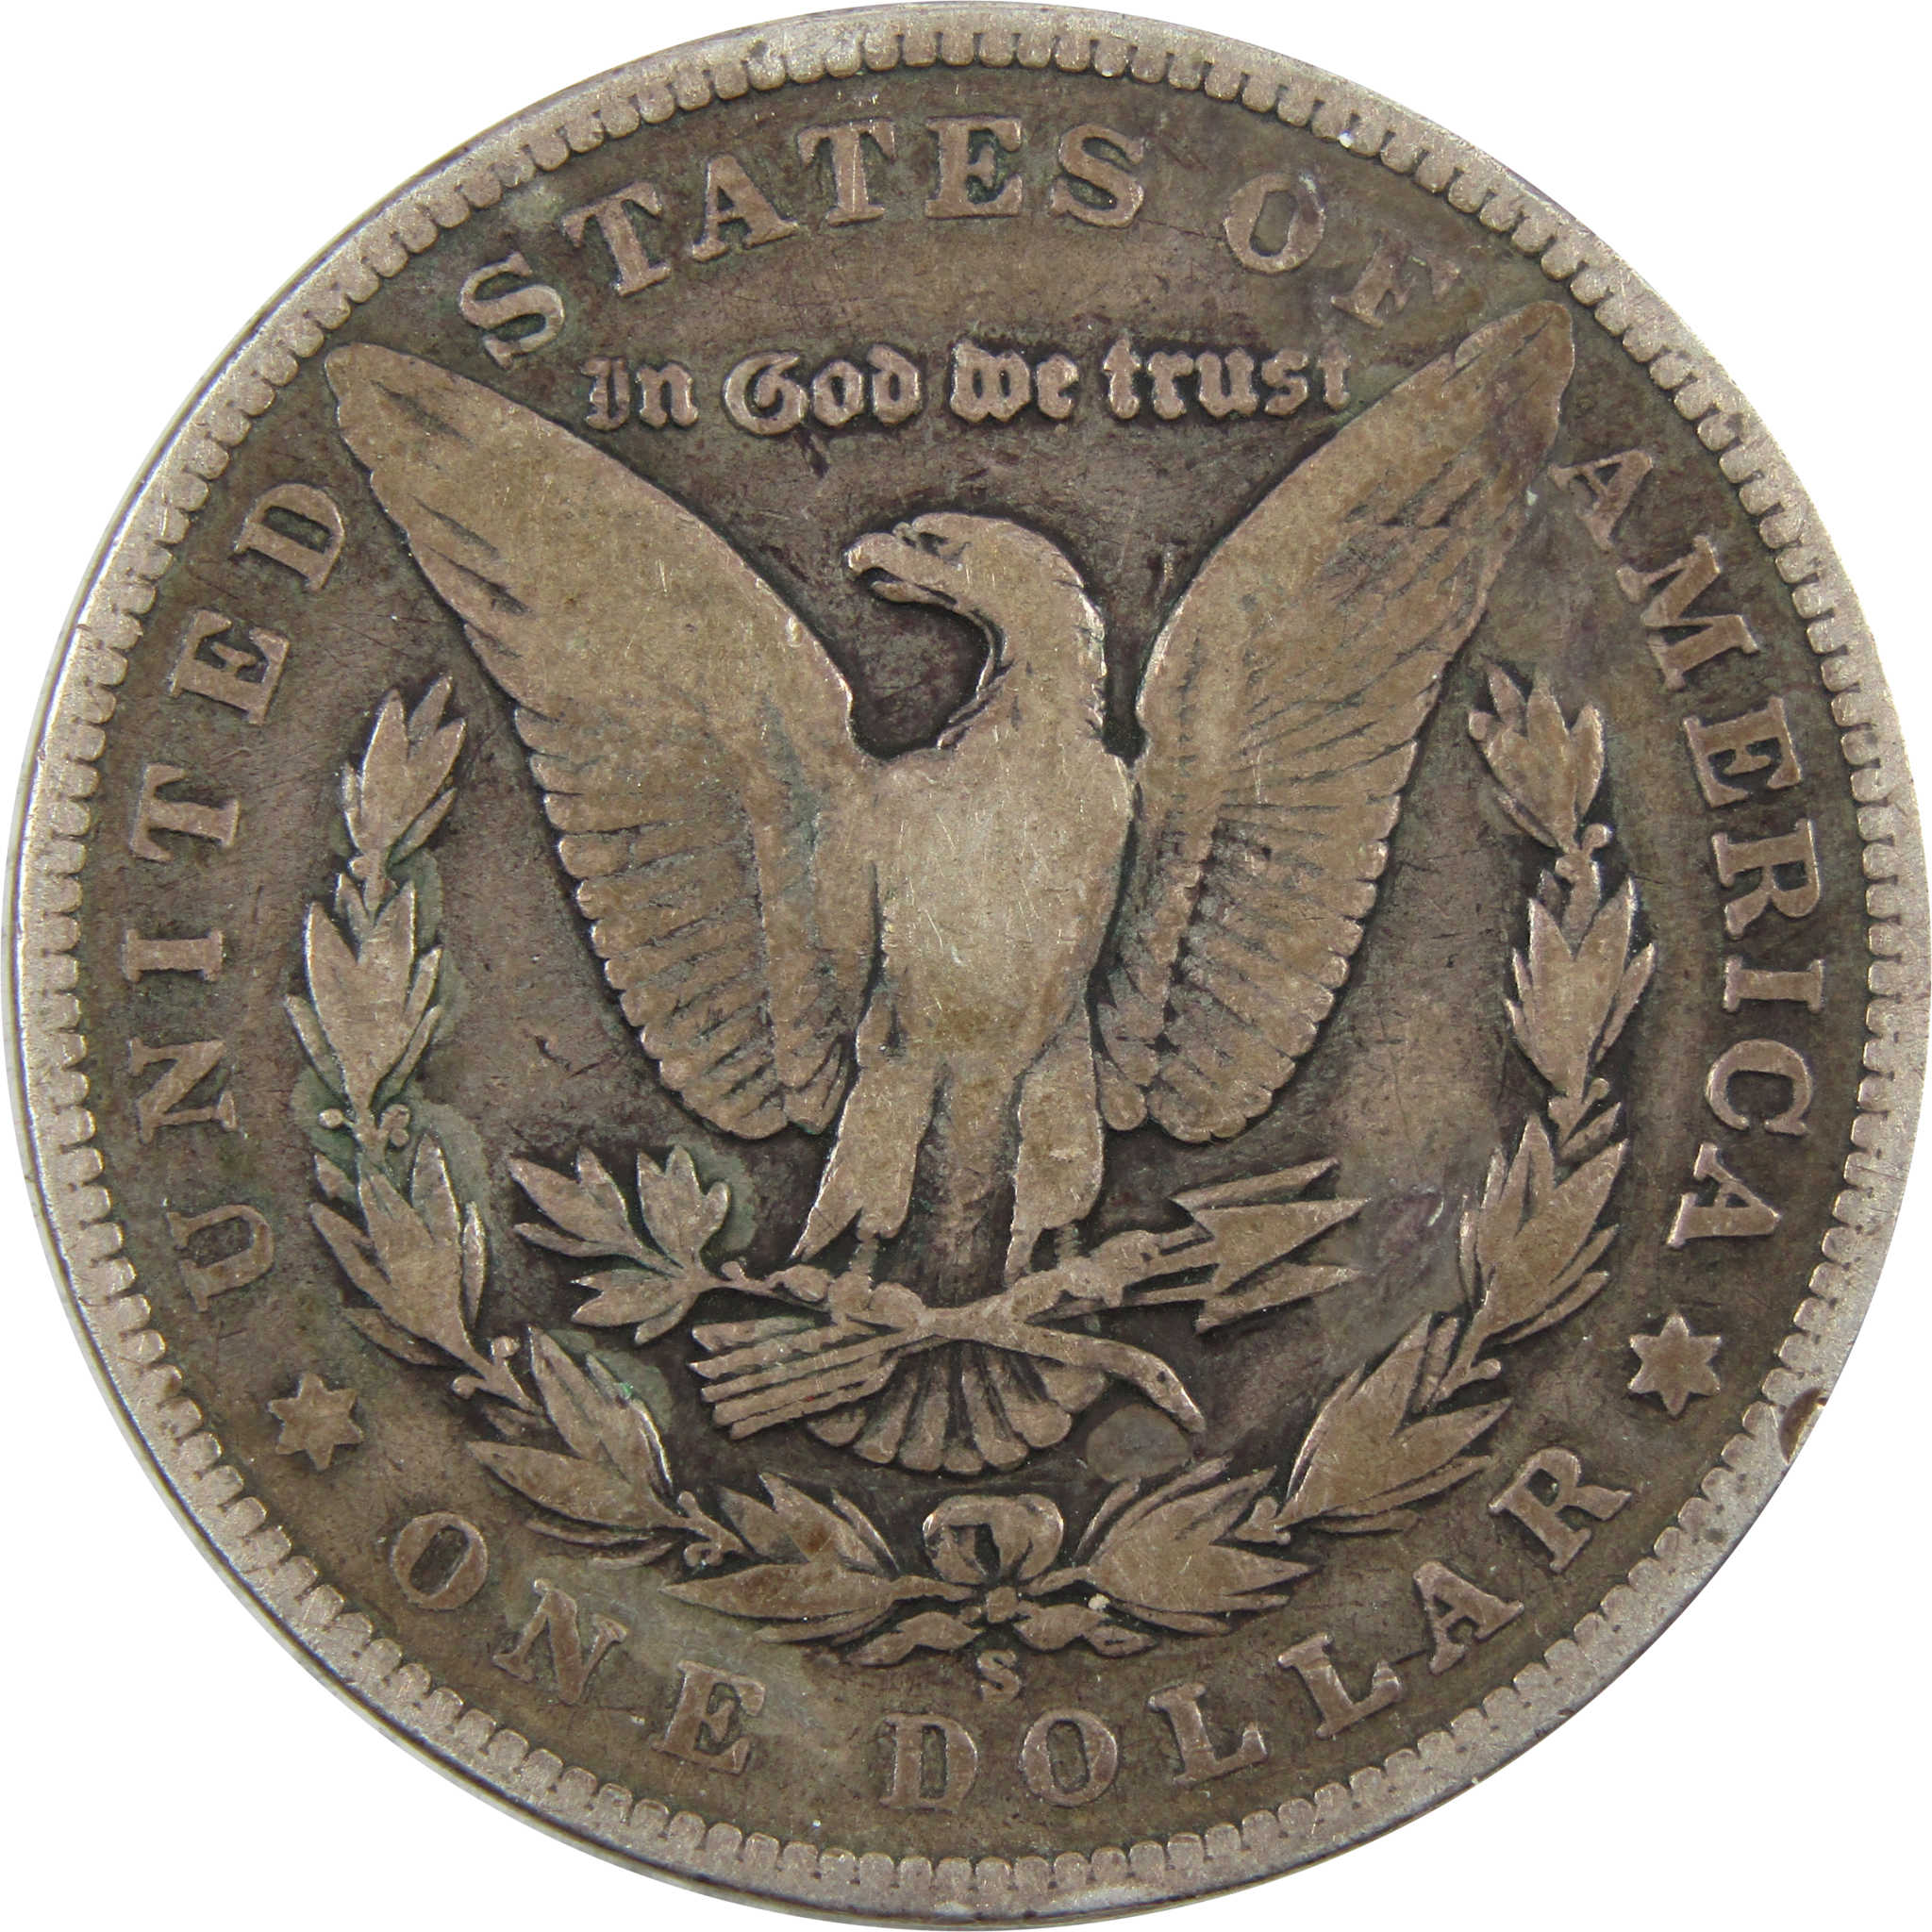 1903 S Morgan Dollar F Fine 90% Silver $1 Coin SKU:I4948 - Morgan coin - Morgan silver dollar - Morgan silver dollar for sale - Profile Coins &amp; Collectibles